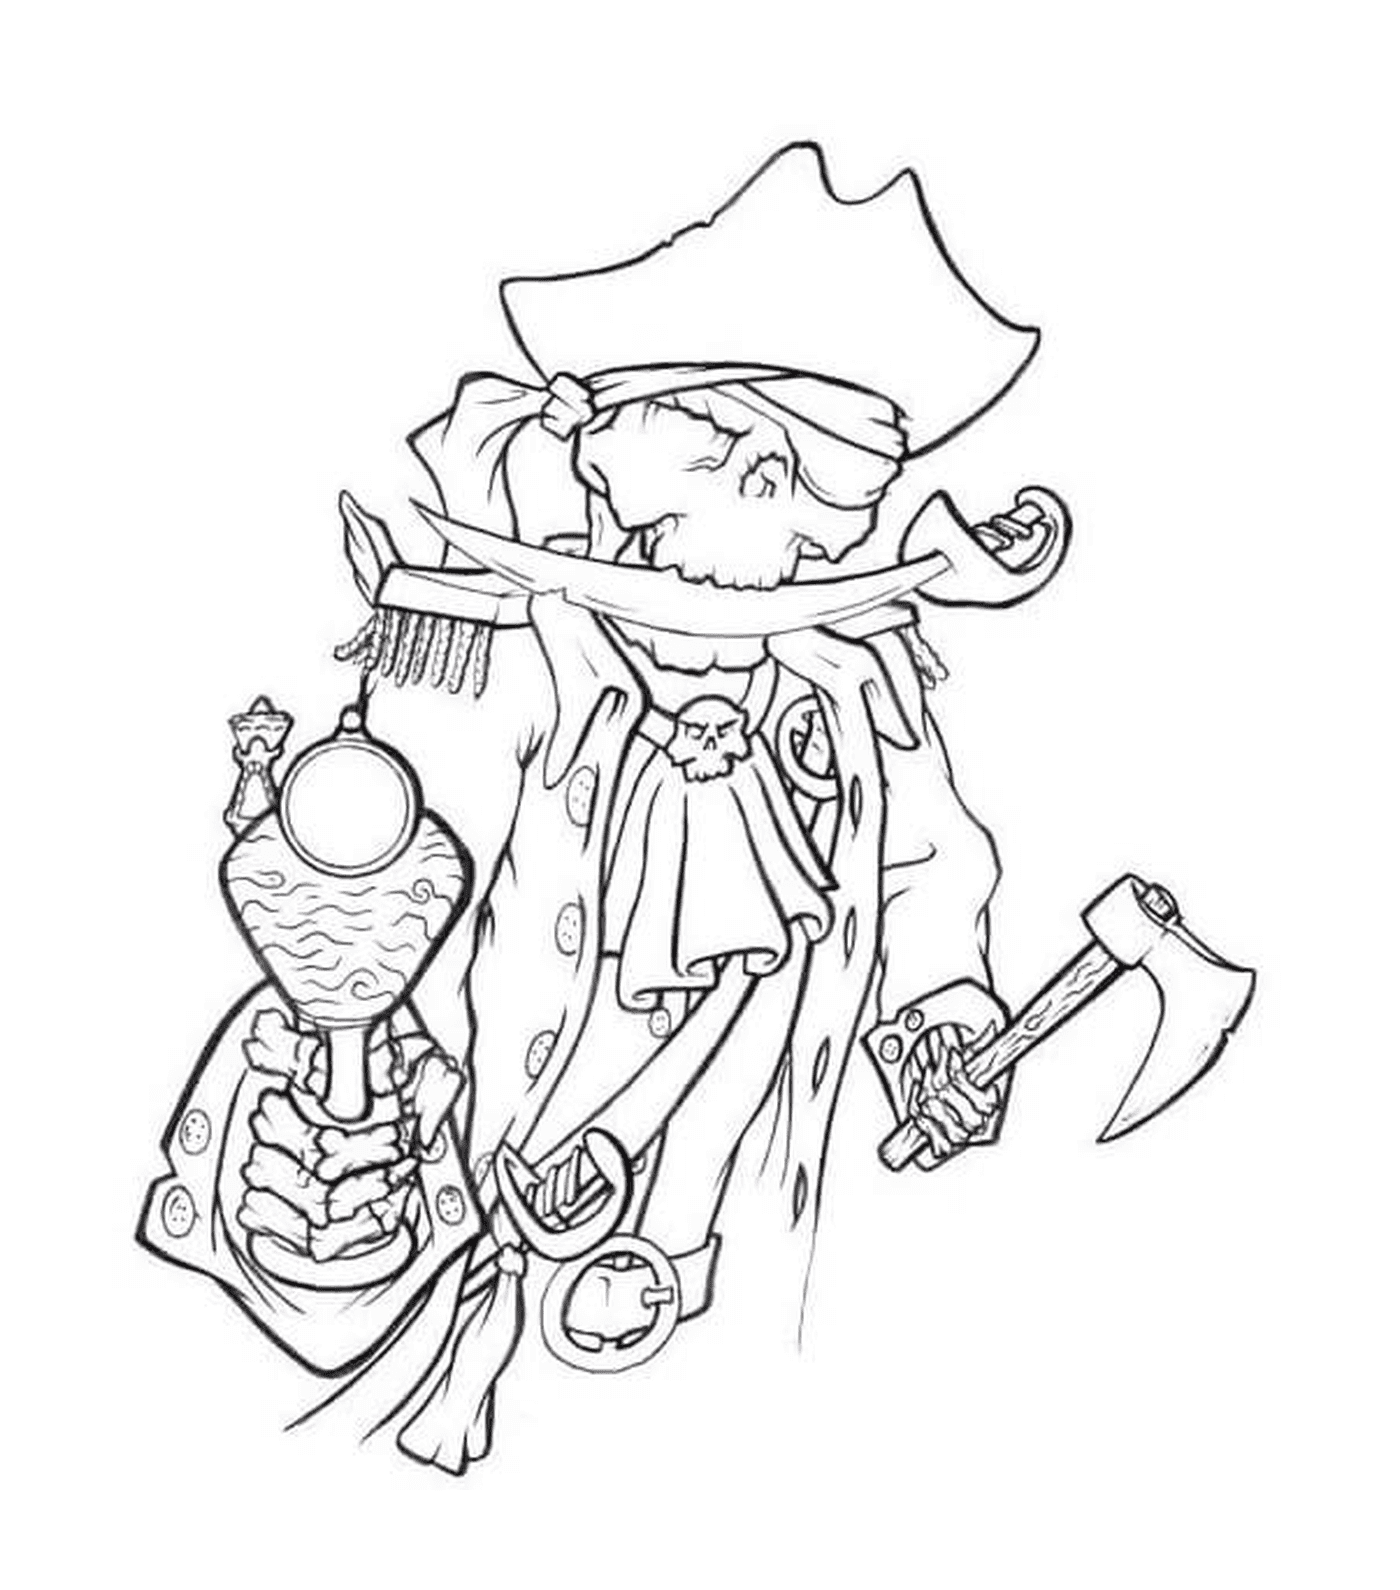   Squelette pirate 